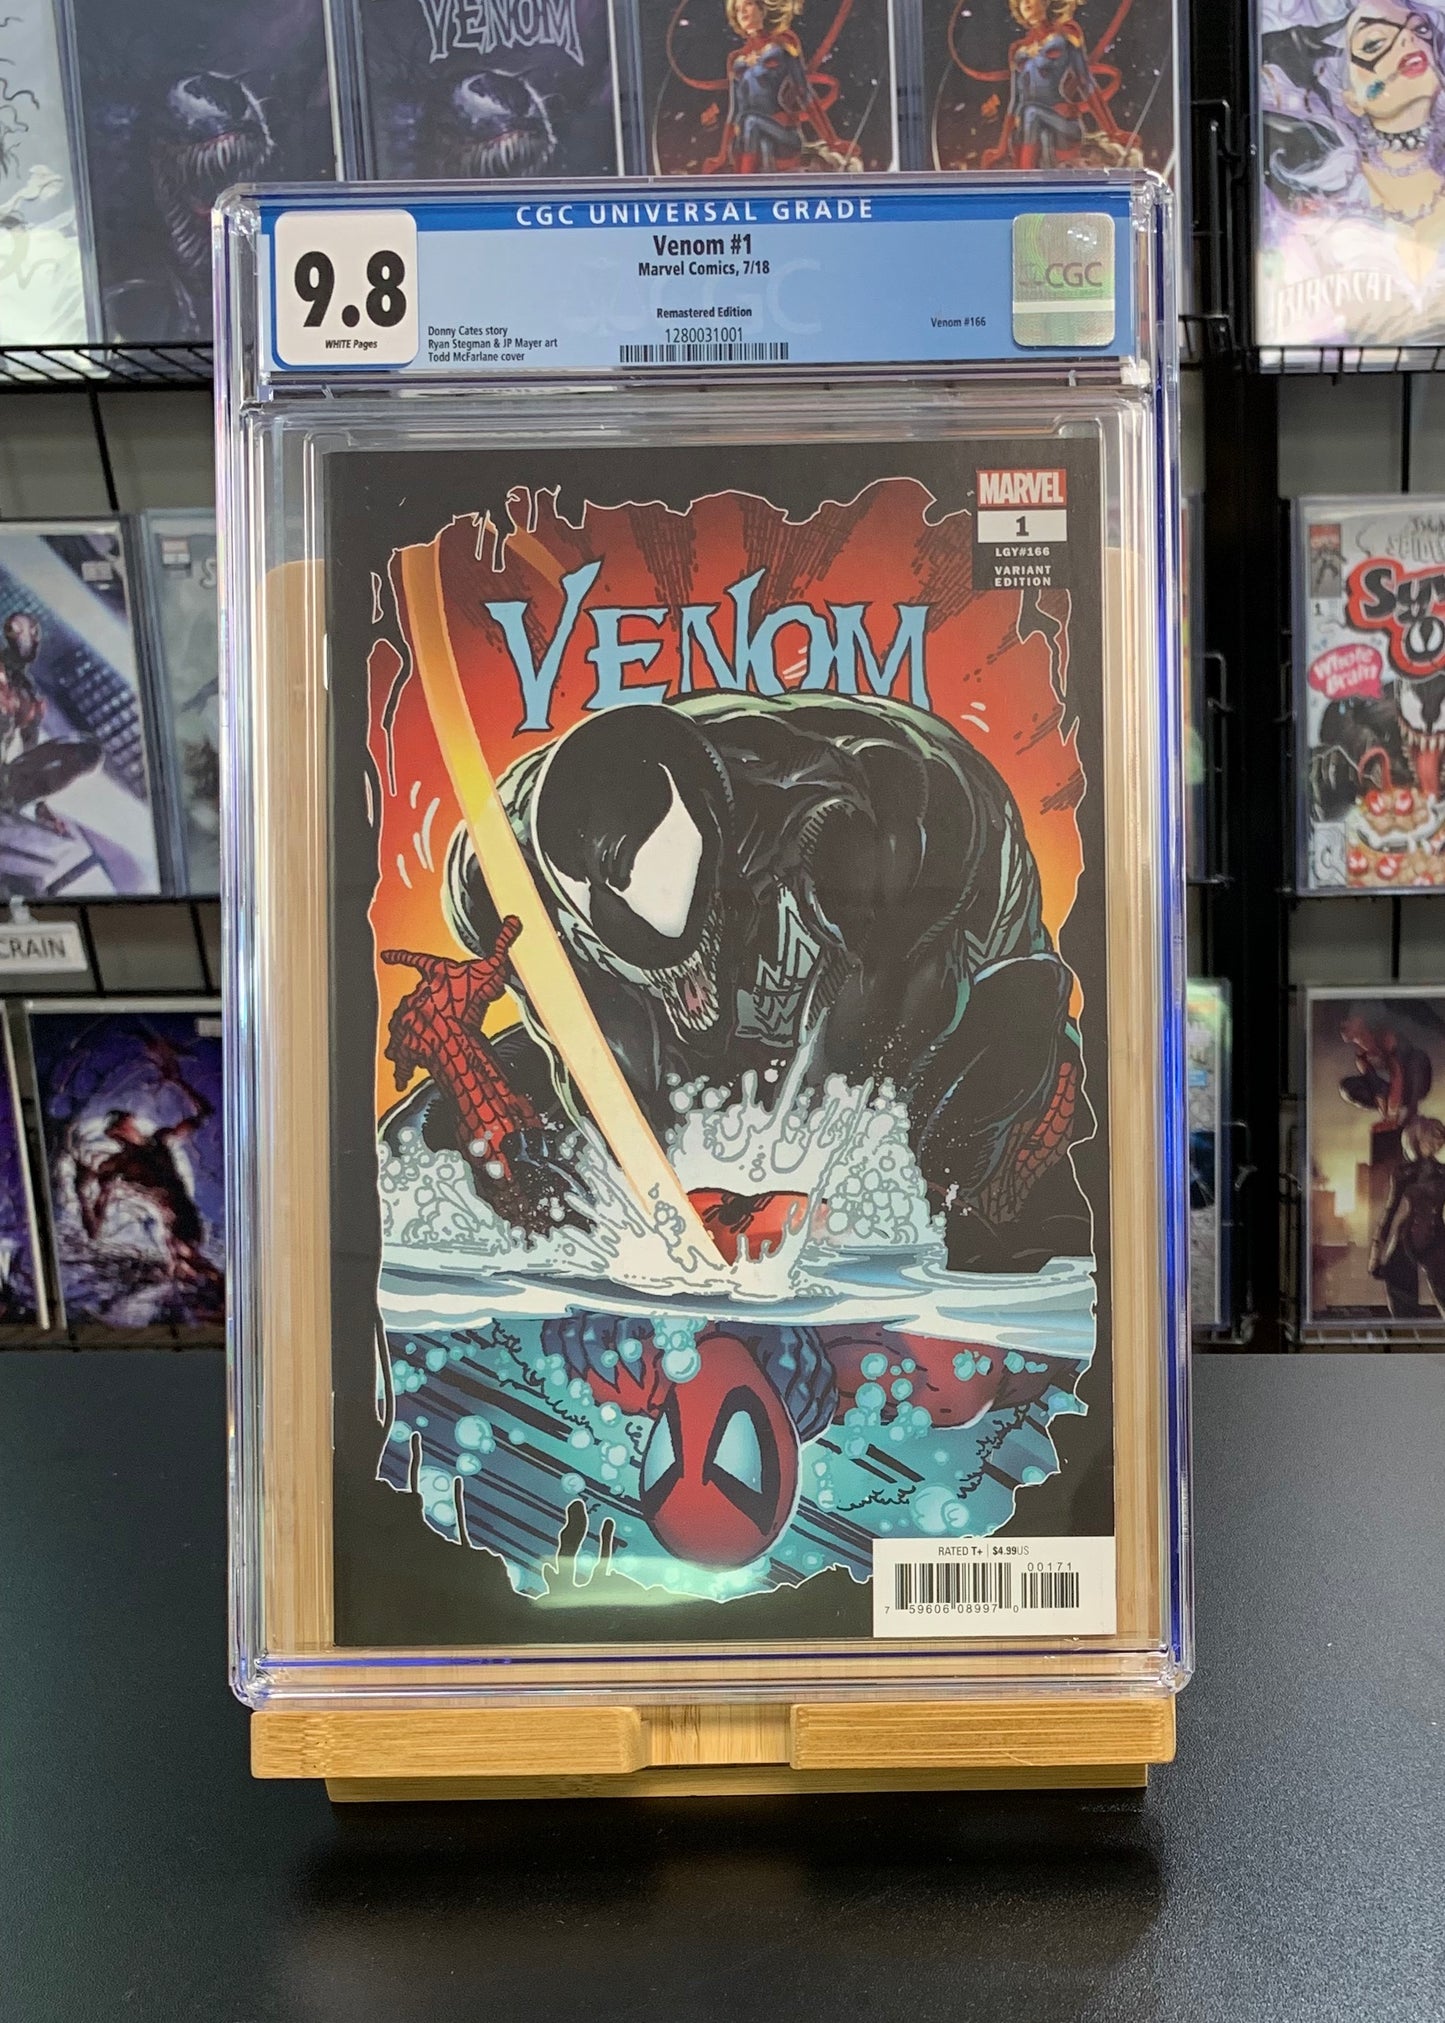 9.8 CGC Venom #1 1:500 Remastered Variant McFarlane Marvel Comics 2018